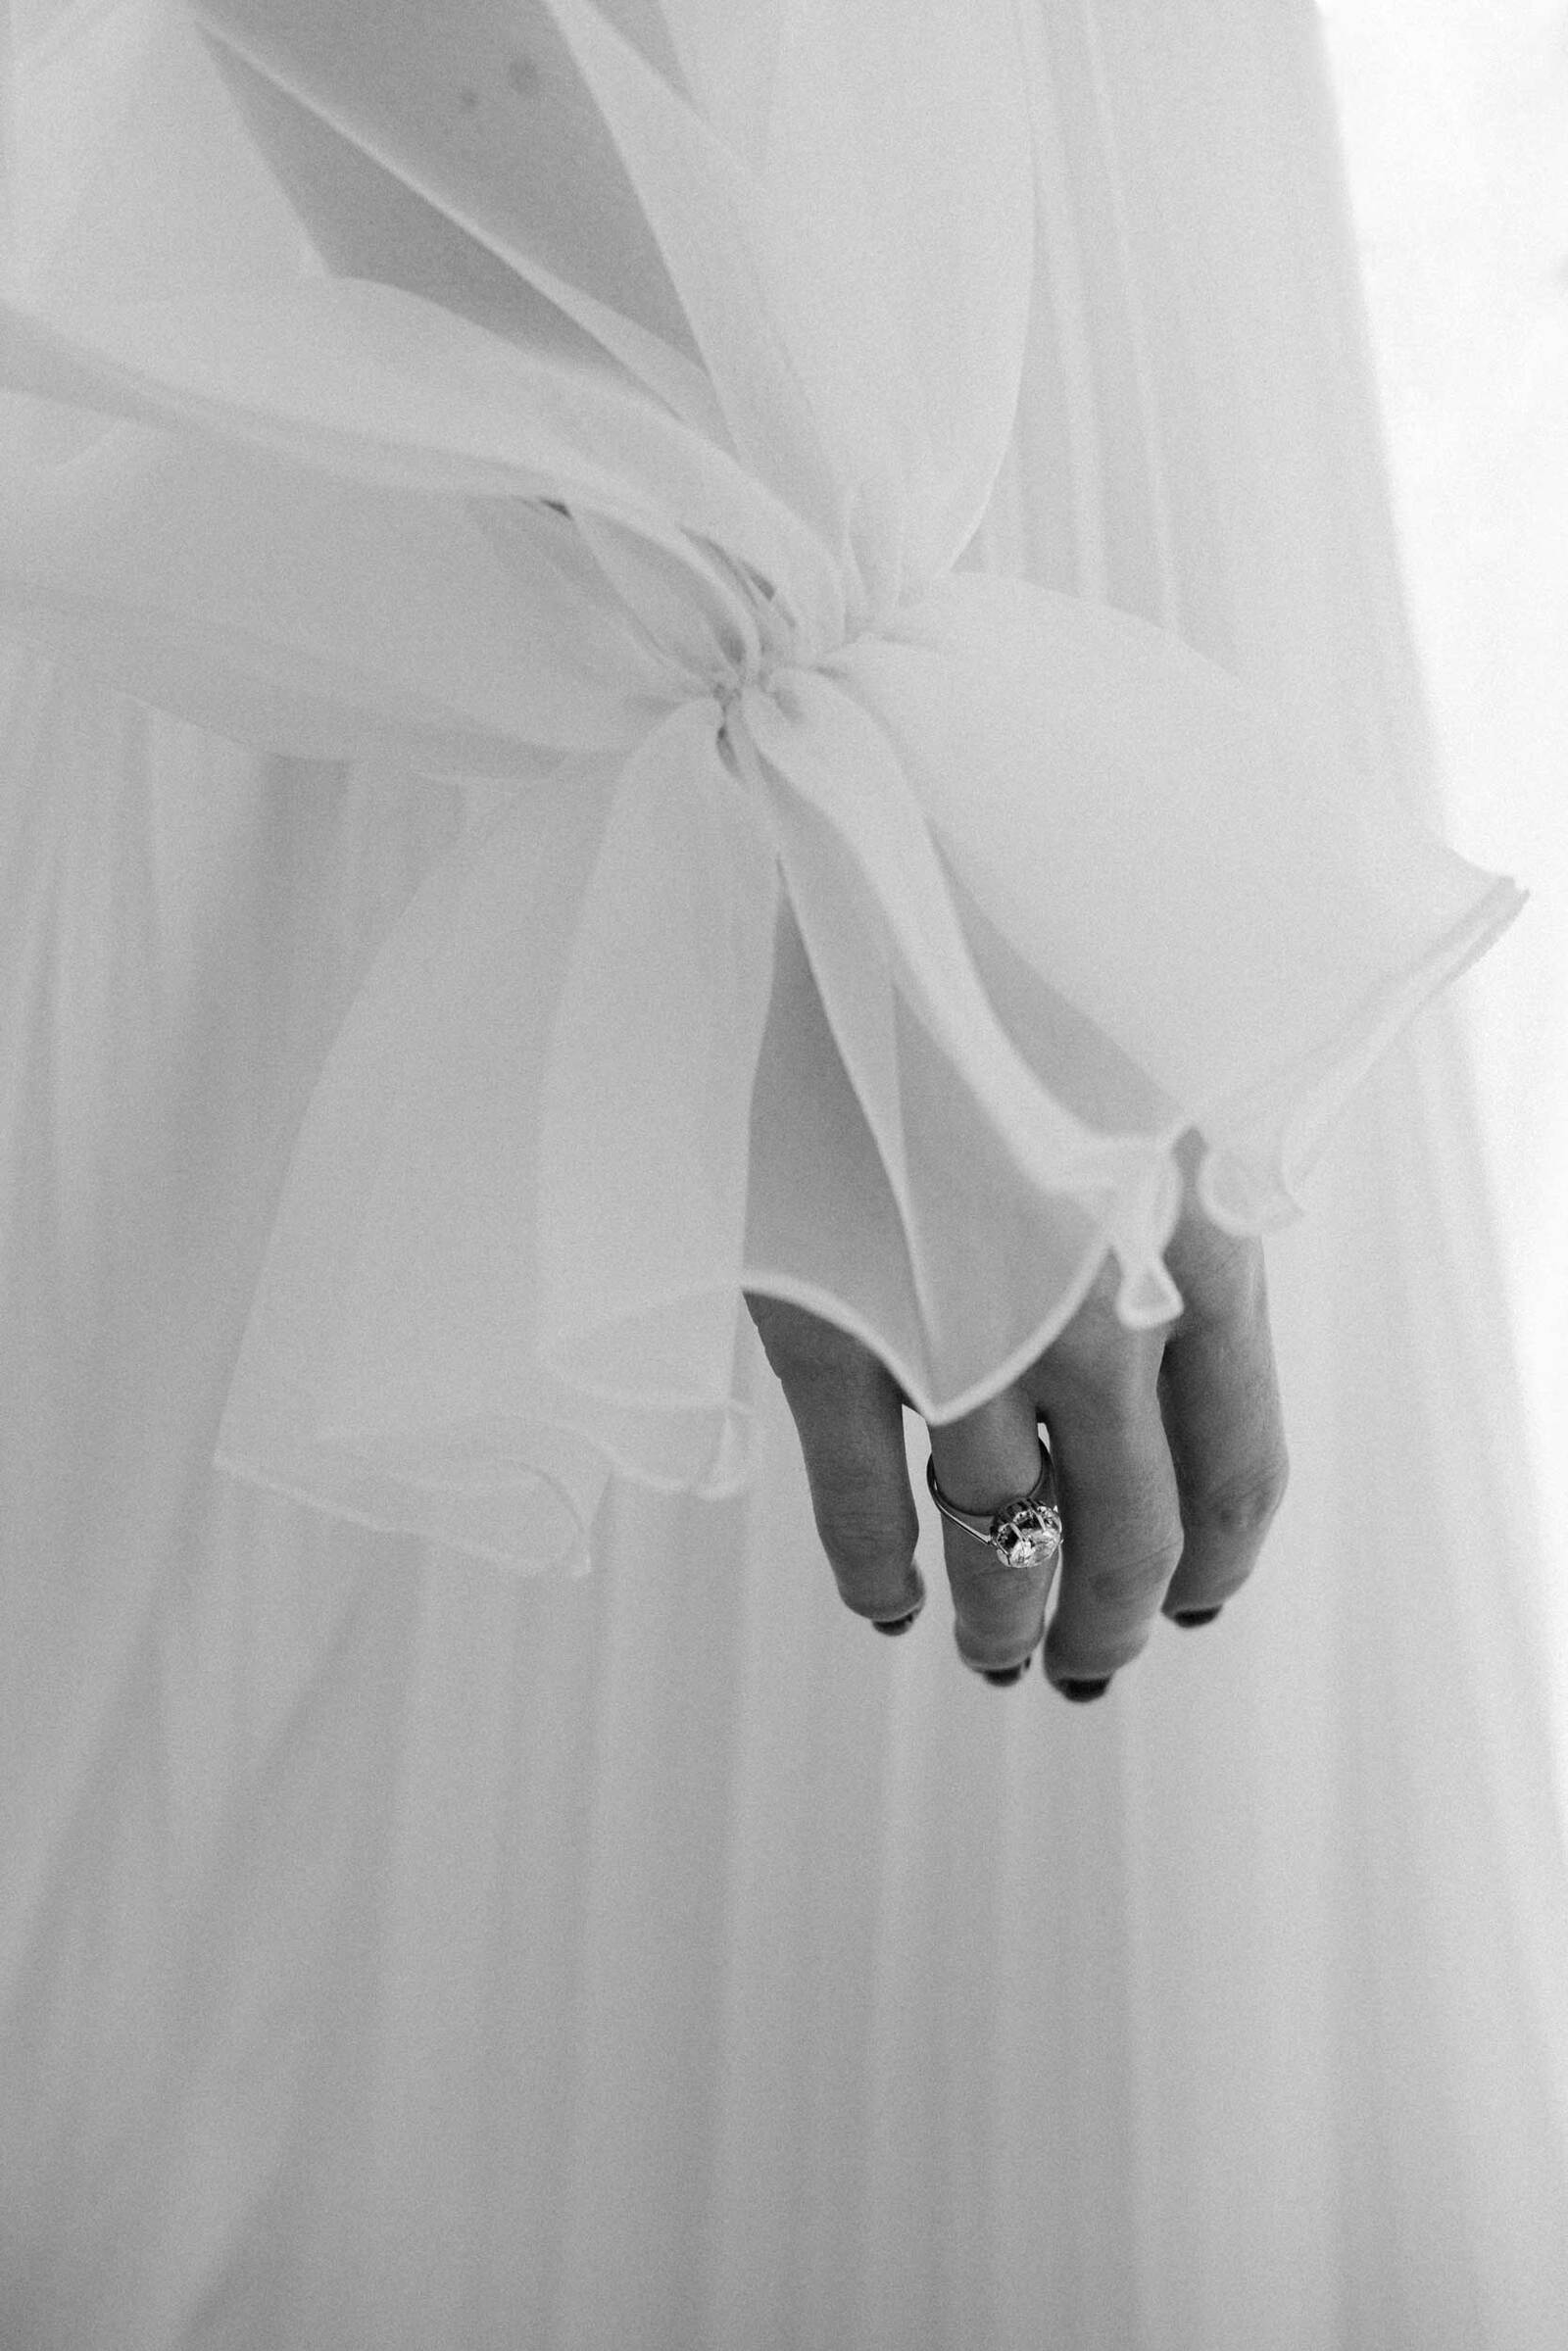 detalle de la manga de un vestido de novia con anillo de compromiso